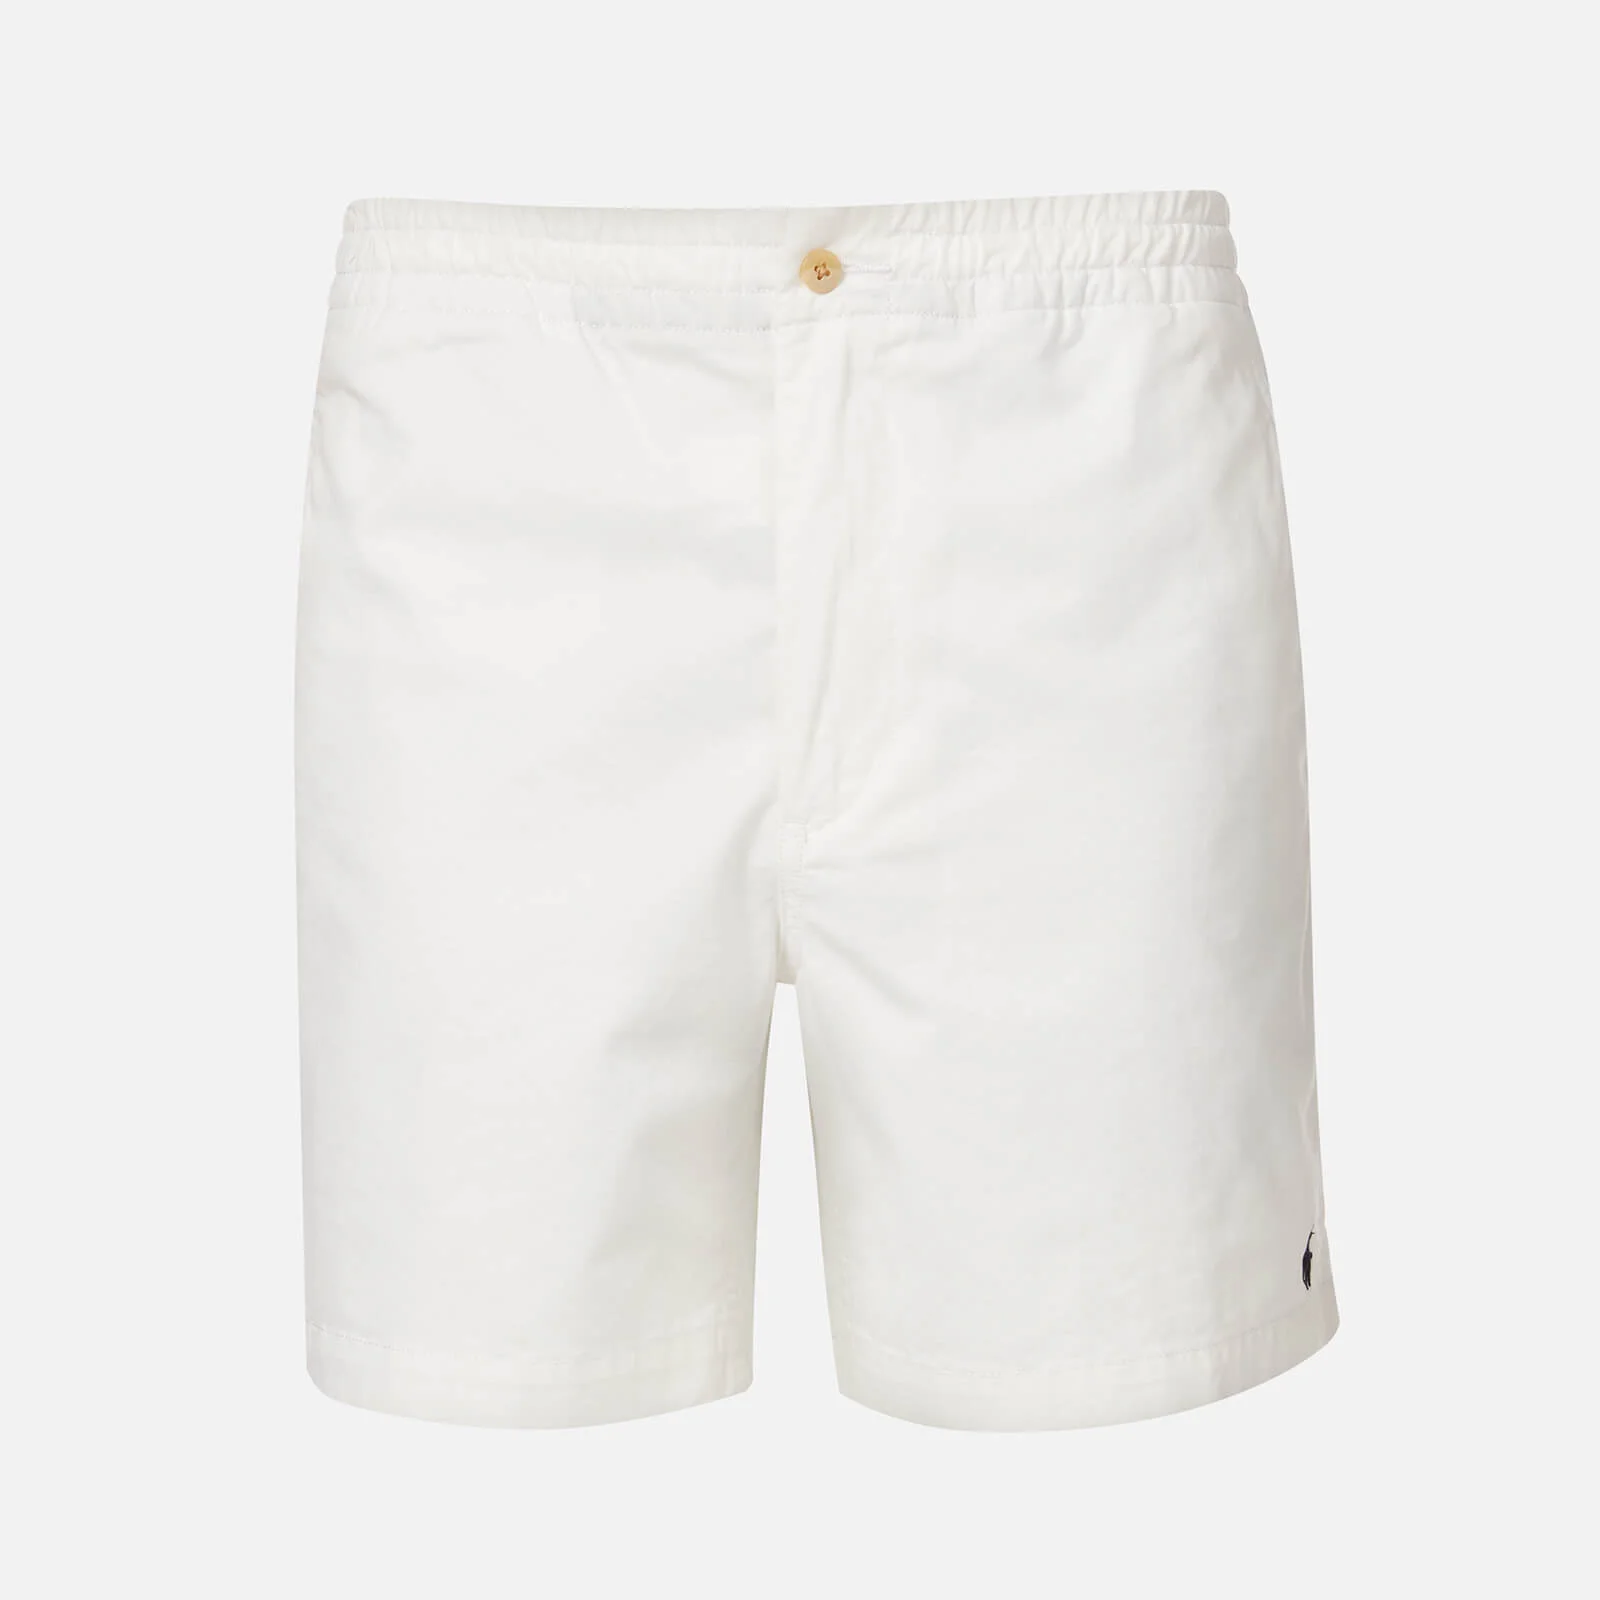 Polo Ralph Lauren Men's Classic Fit Prepster Short - White Image 1